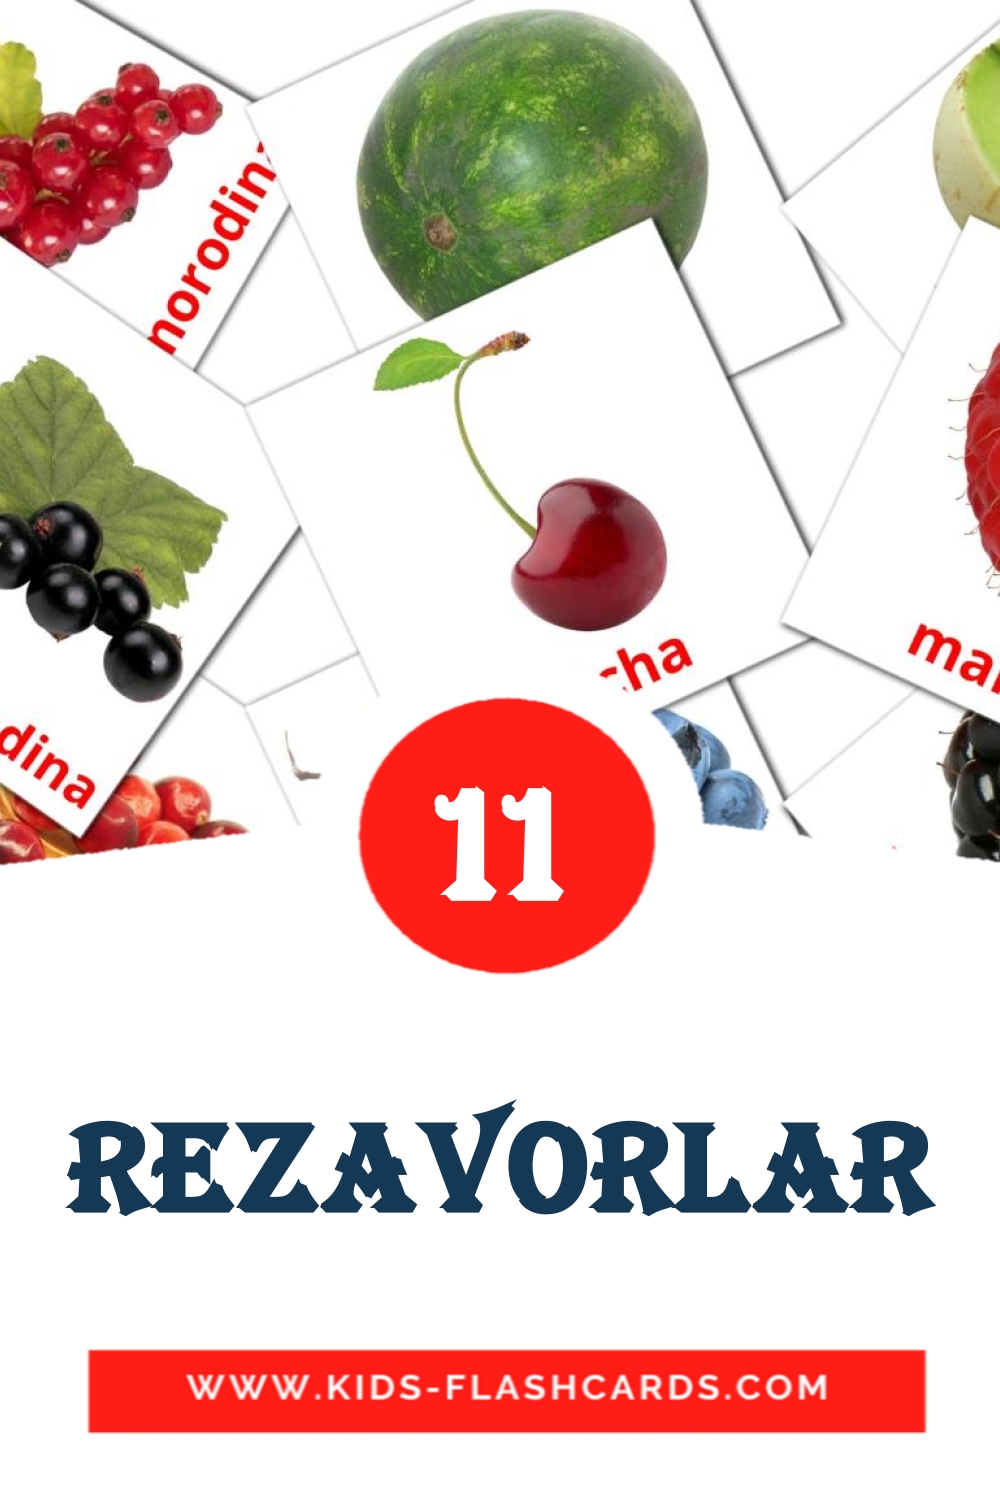 11 rezavorlar Picture Cards for Kindergarden in uzbek